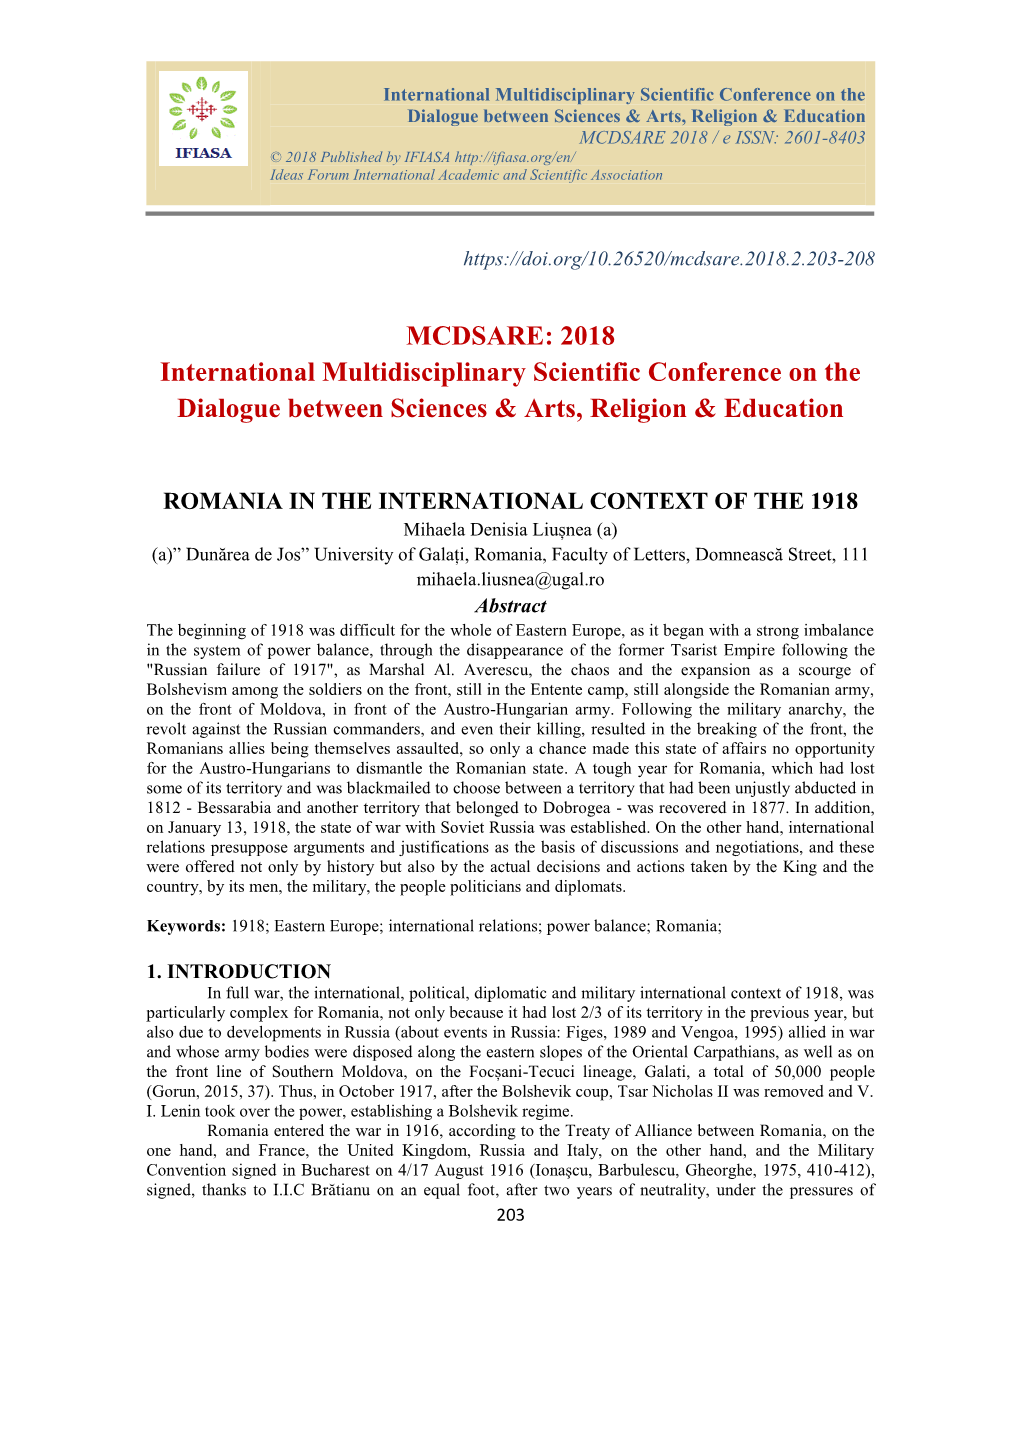 MCDSARE: 2018 International Multidisciplinary Scientific Conference on the Dialogue Between Sciences & Arts, Religion